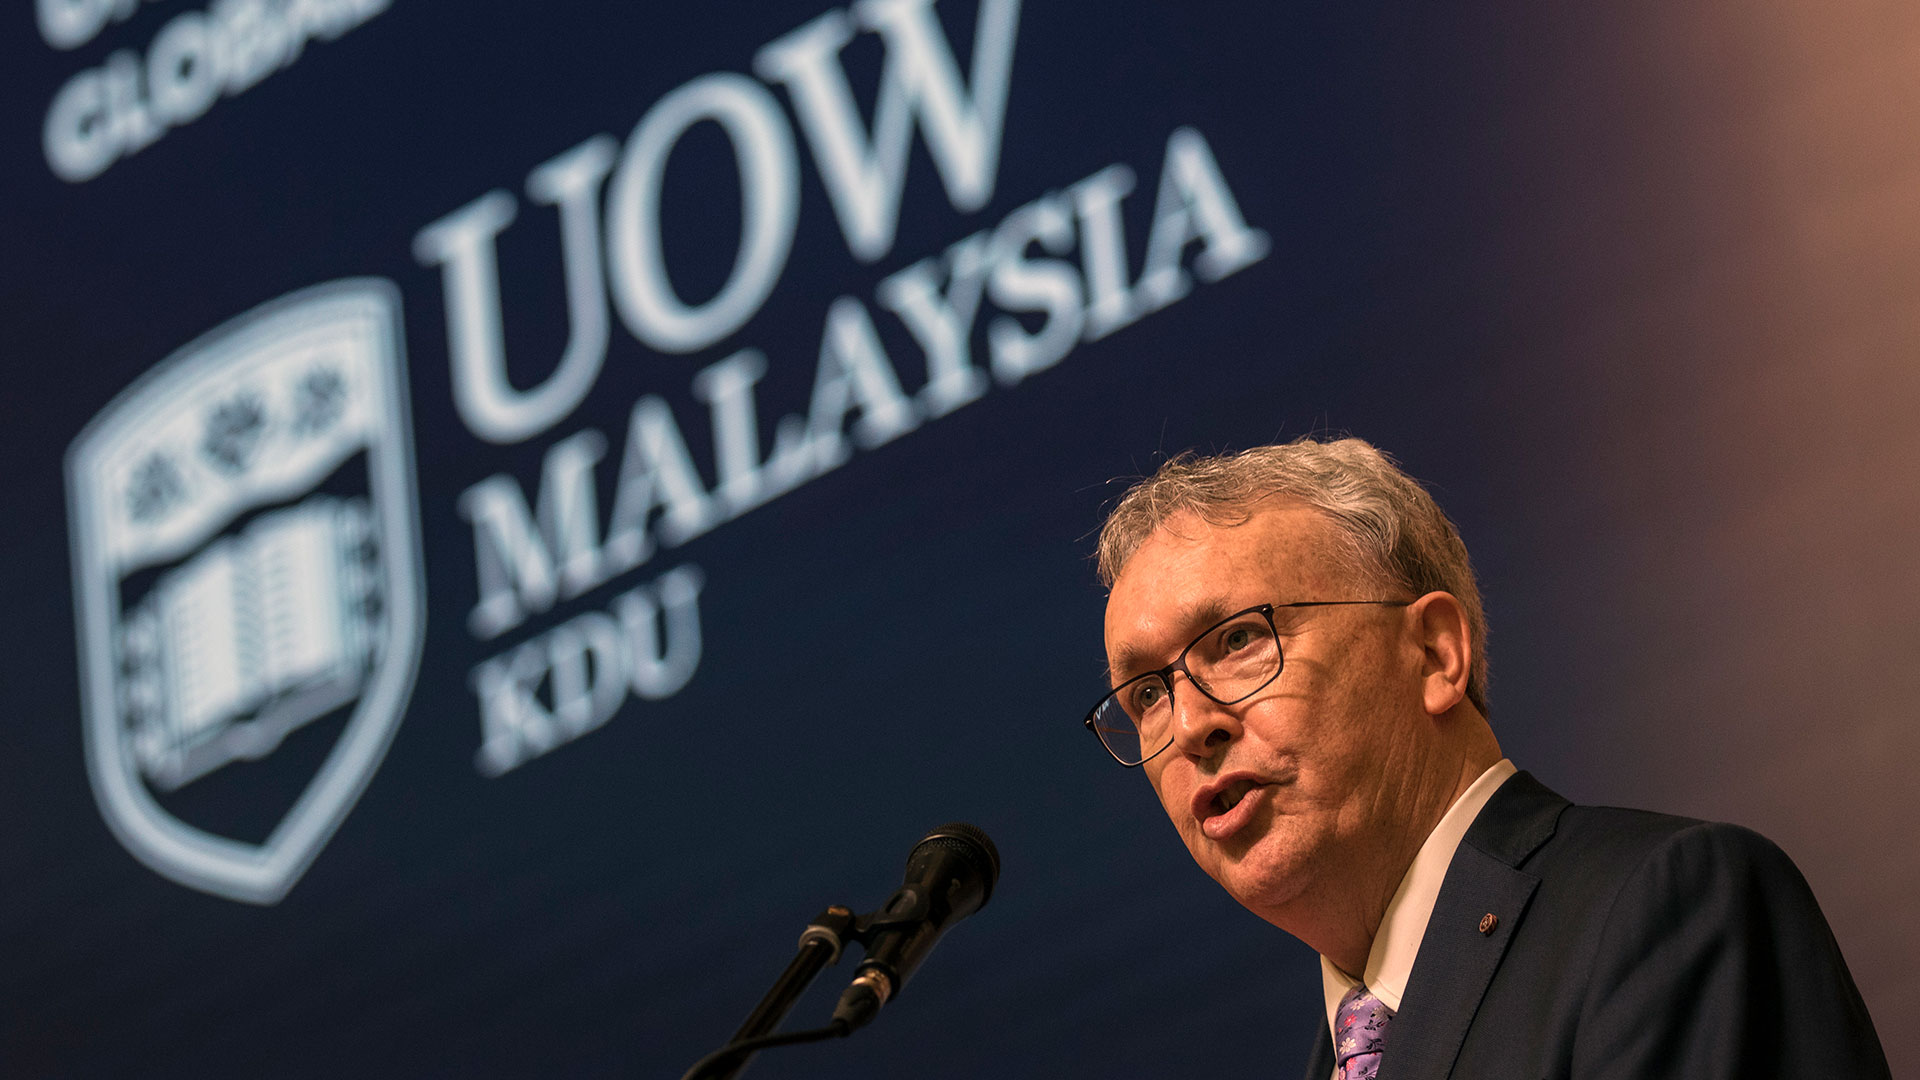 Vice-Chancellor Professor Paul Wellings at UOW Malaysia KDU inauguration